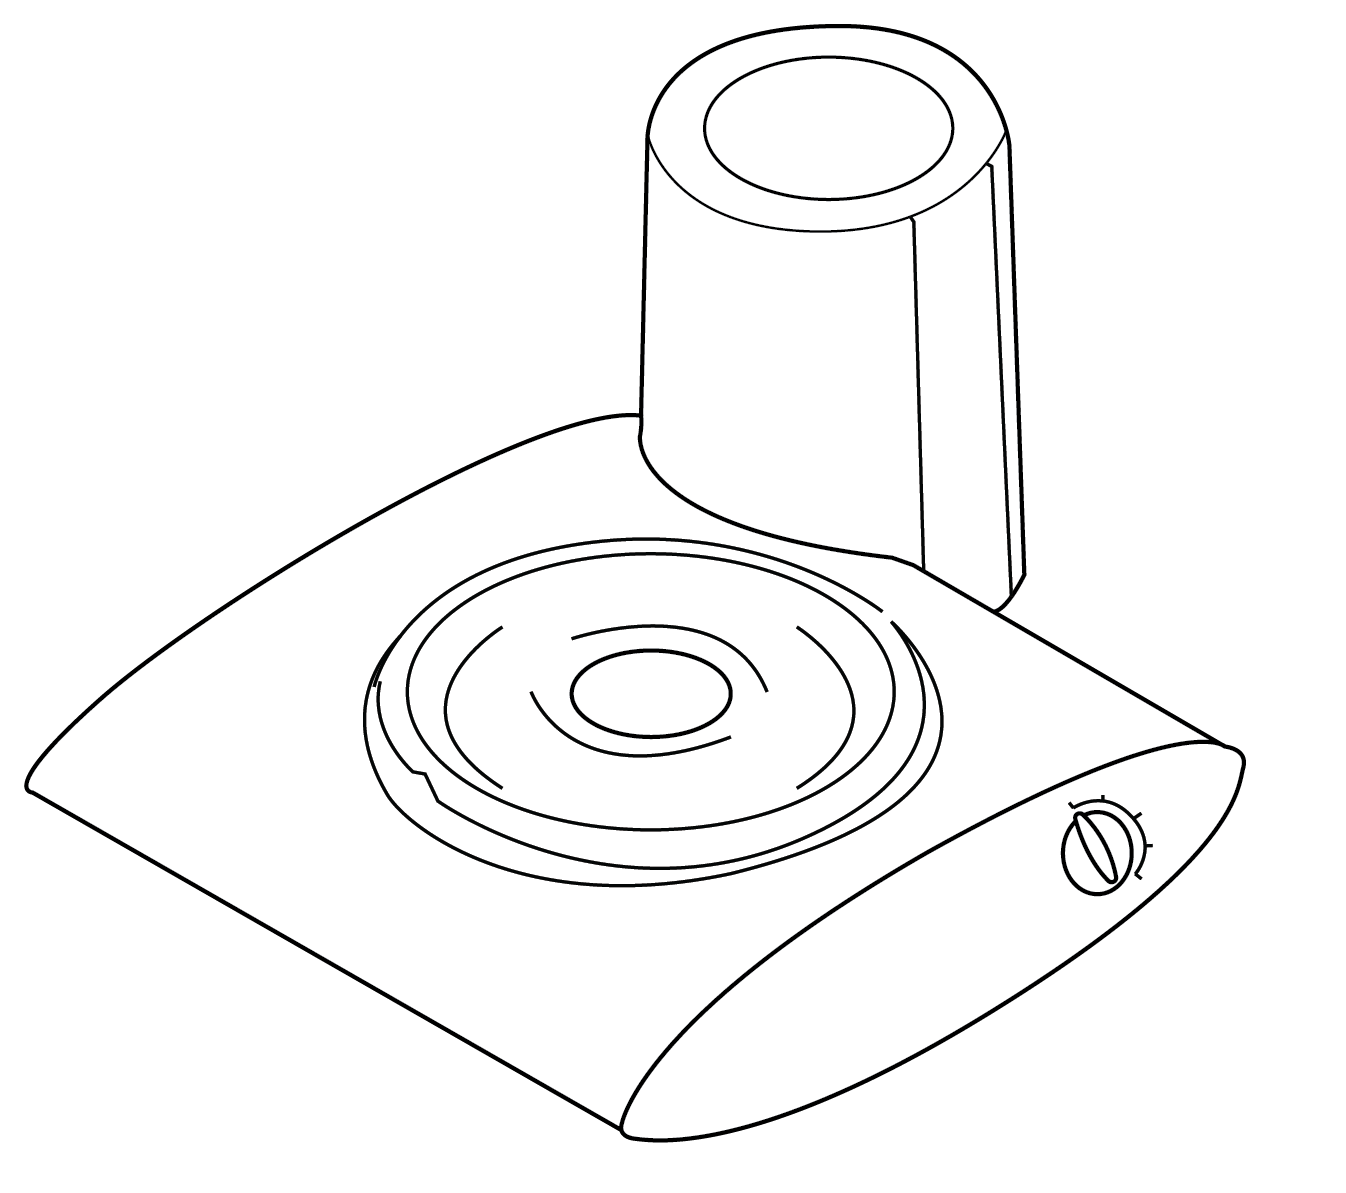 Bosch Vacuum Blender Jar for Universal Plus - MUZPVB1